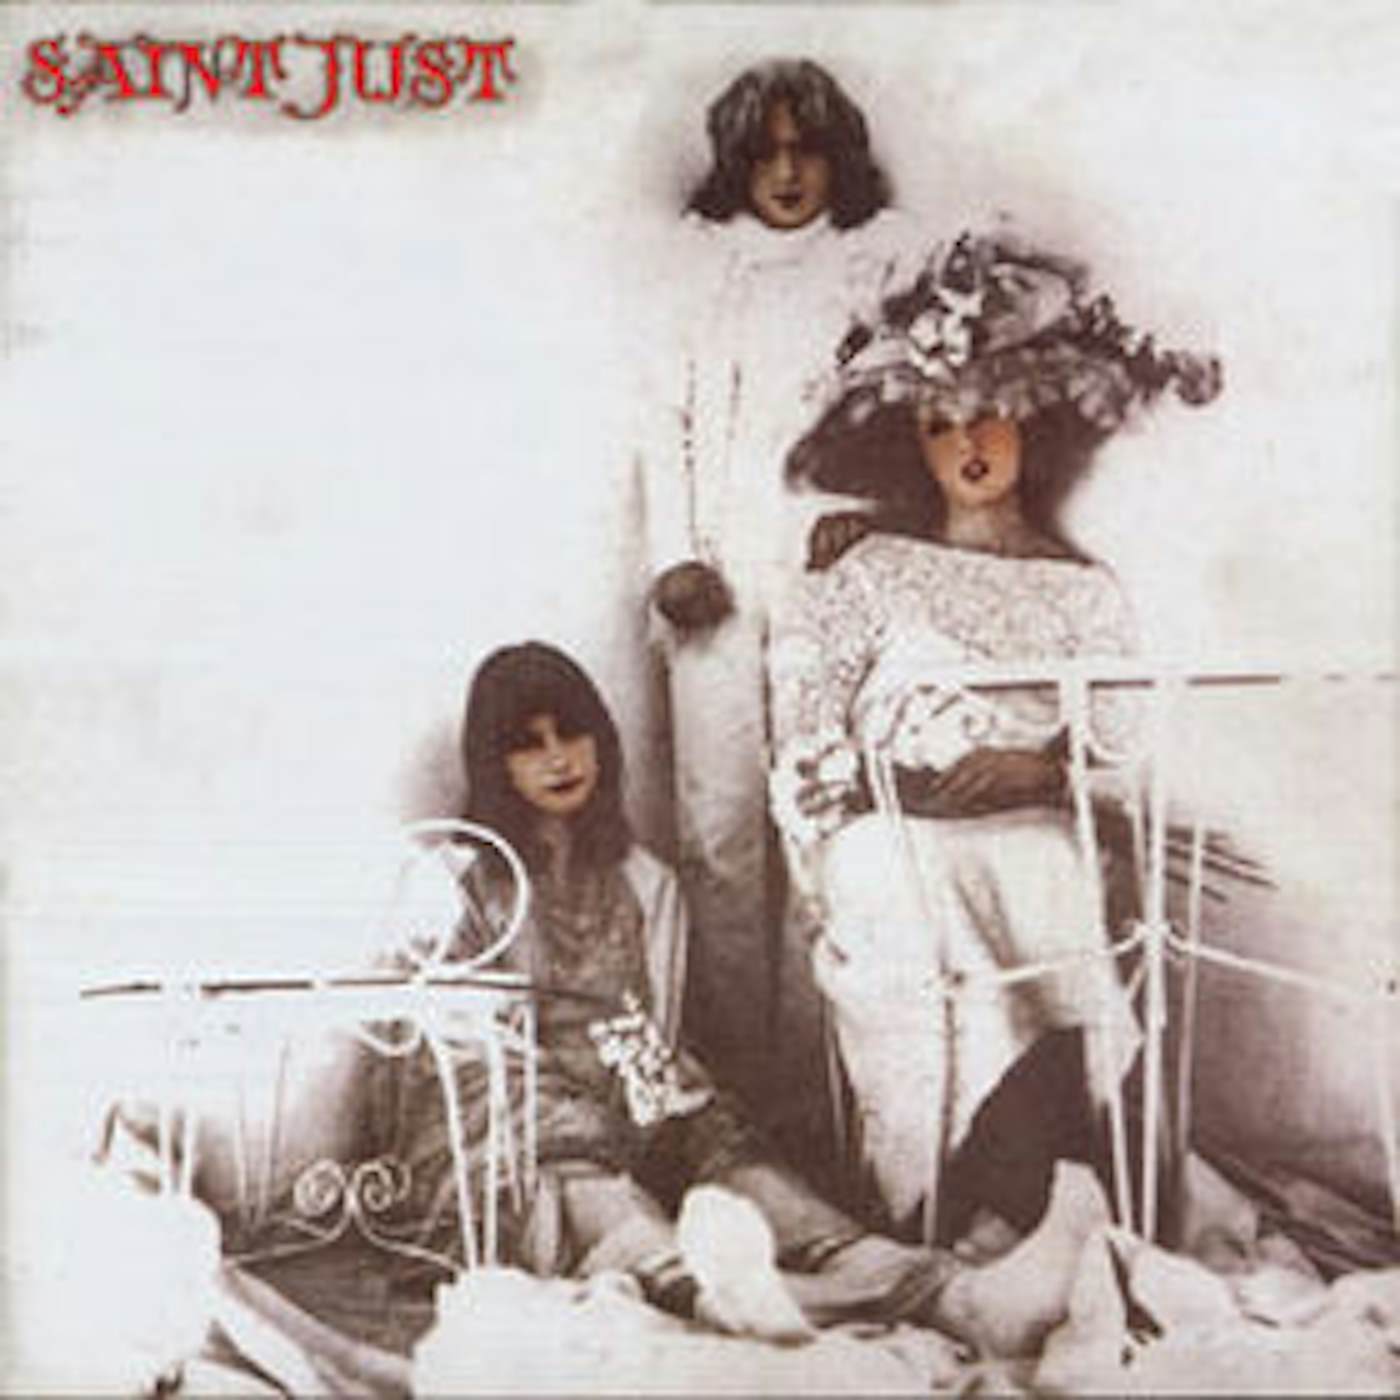 Saint Just Vinyl Record